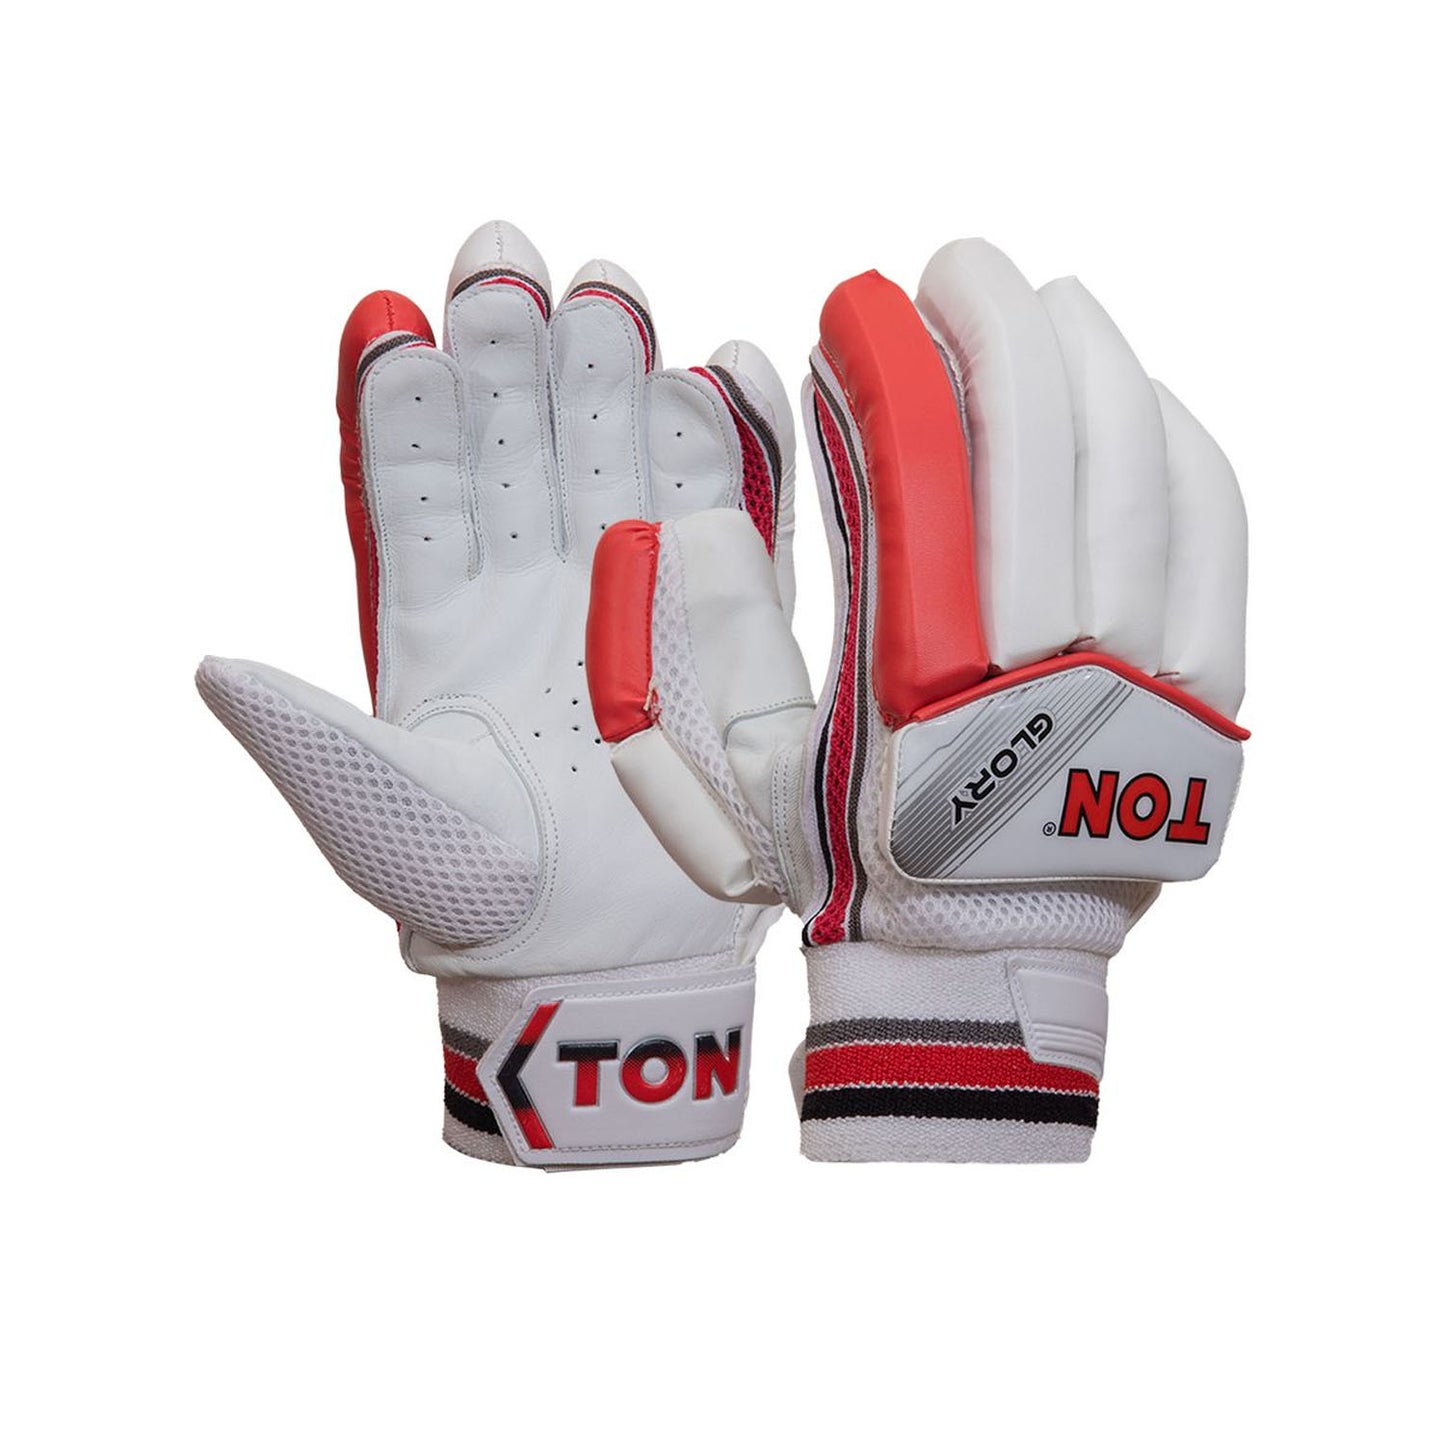 SS Ton Glory Left Hand Cricket Batting Gloves - Best Price online Prokicksports.com